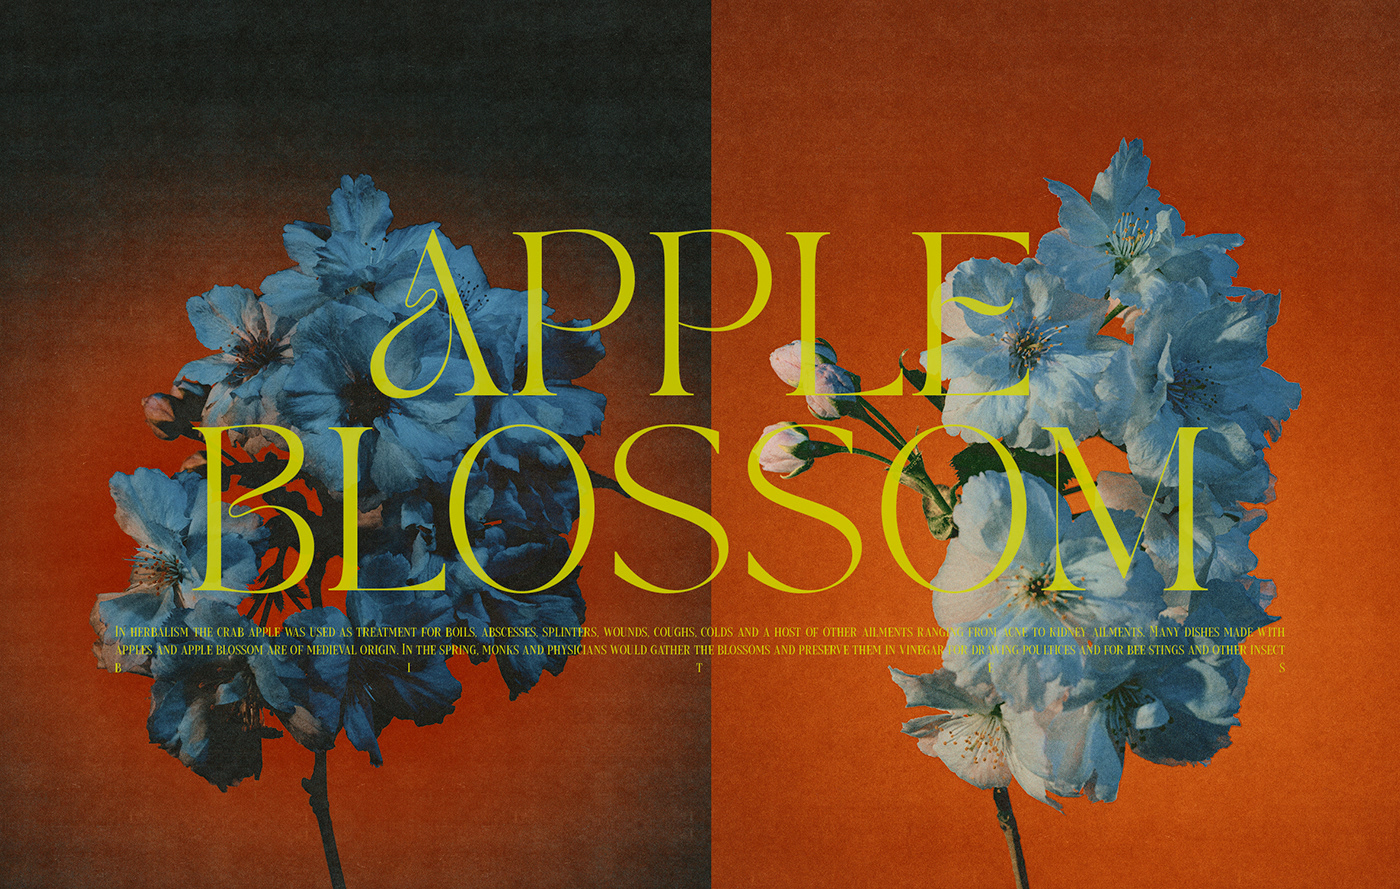 1990s concept design Digital Art  floral Flowers Nature Photography  Retro typography  